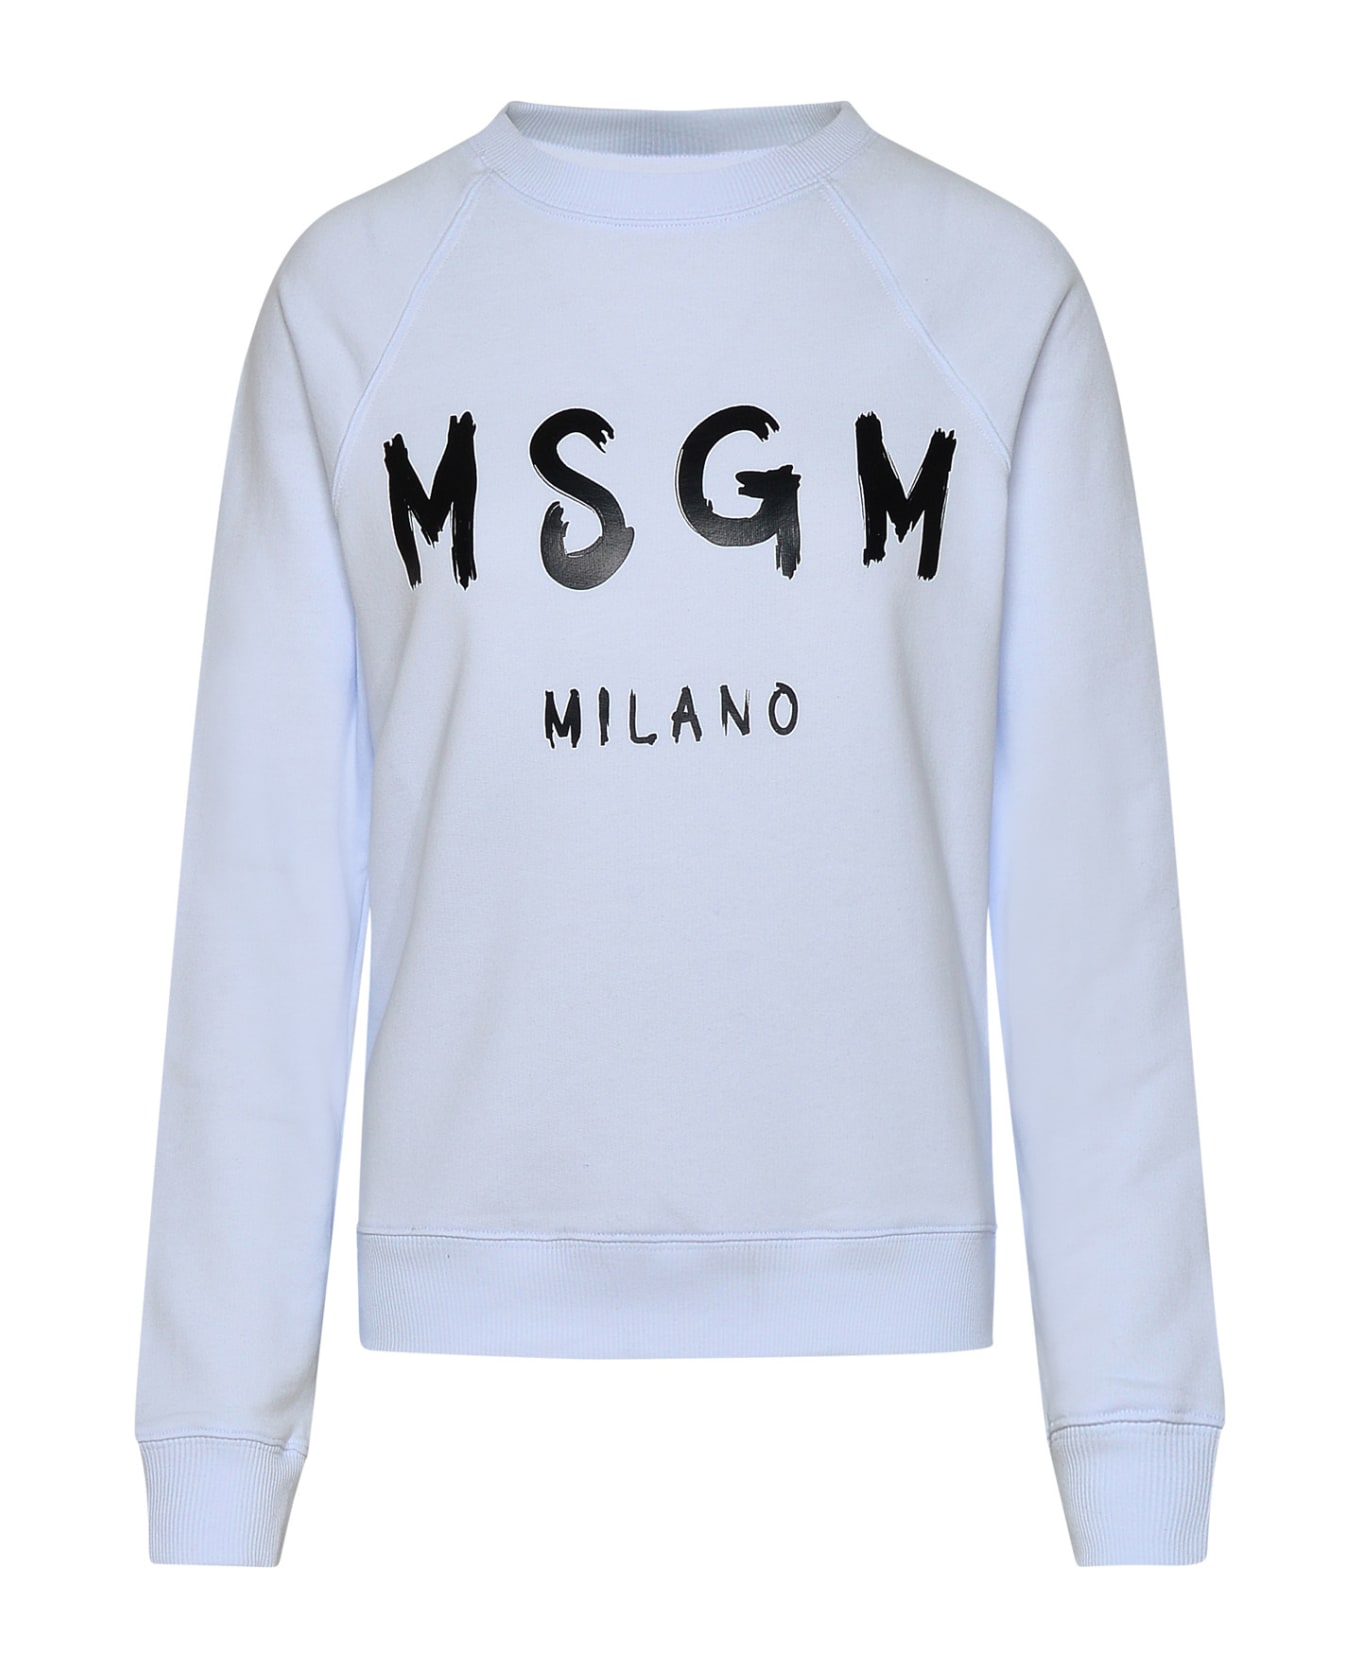 MSGM White Cotton Sweatshirt - Bianco フリース